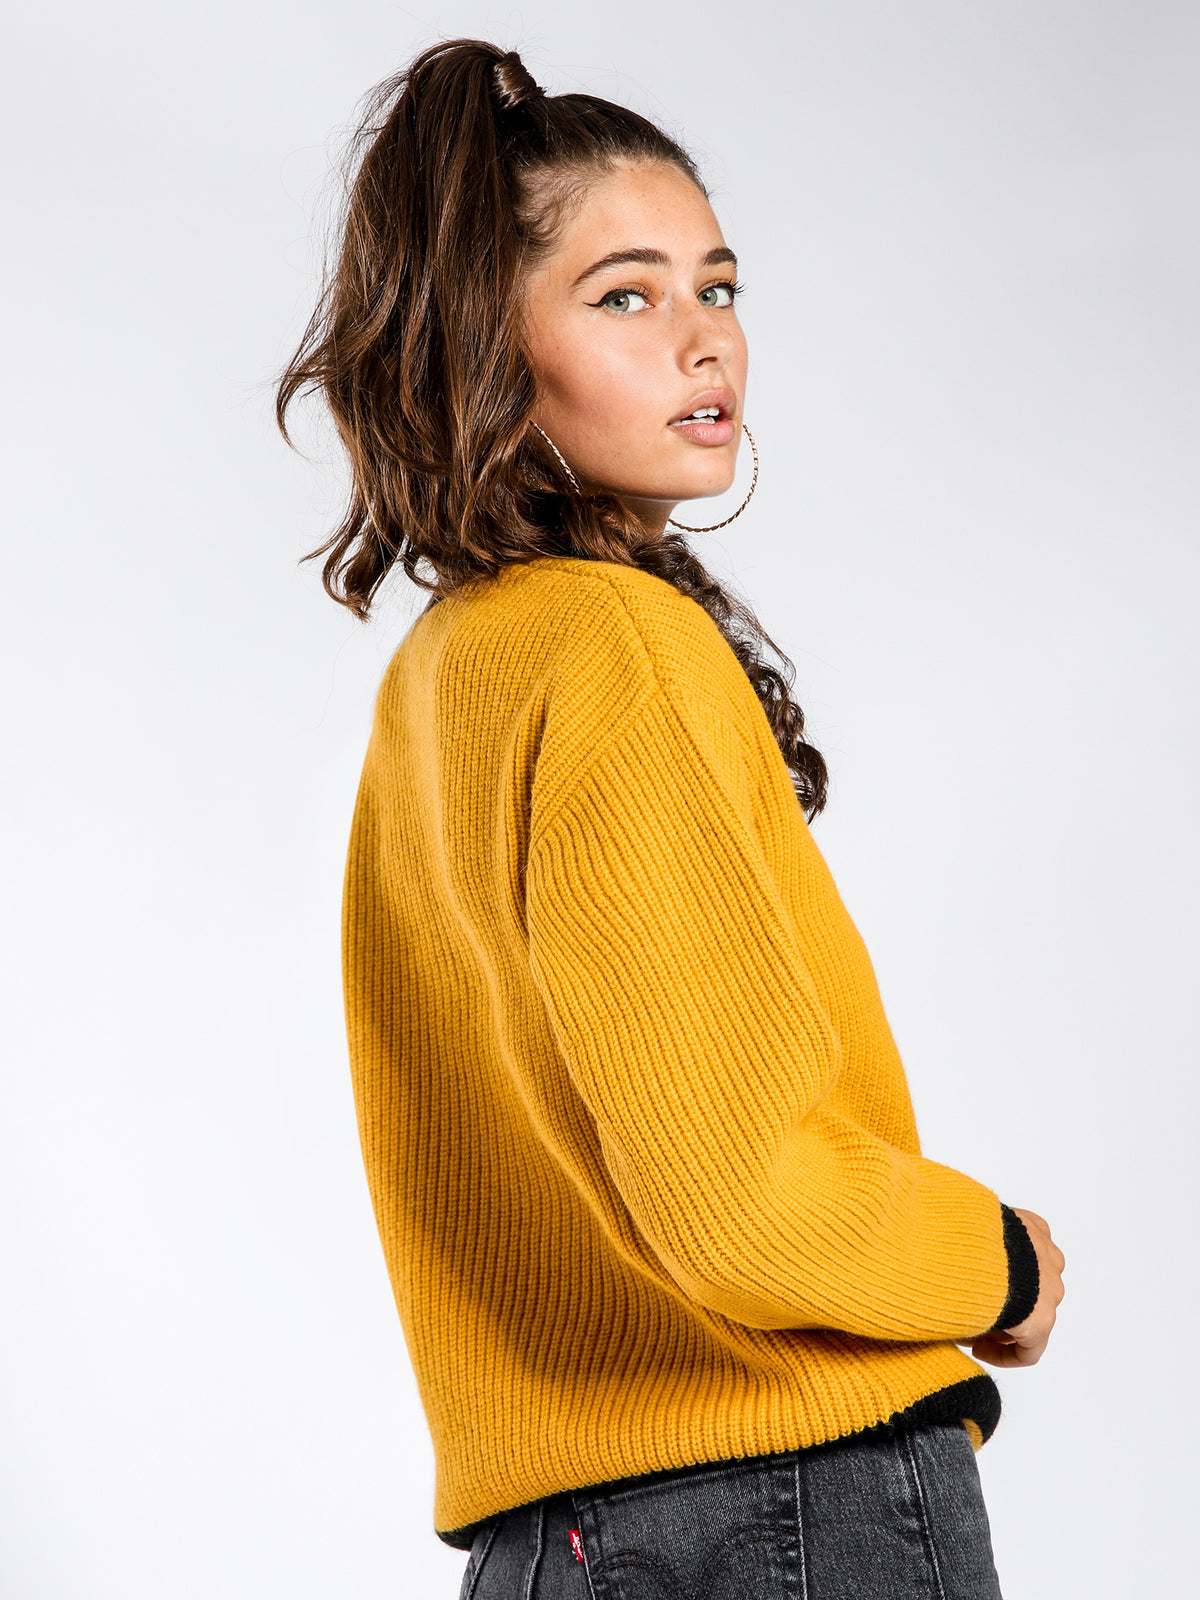 Pembroke Sweater in Gold &amp; Black